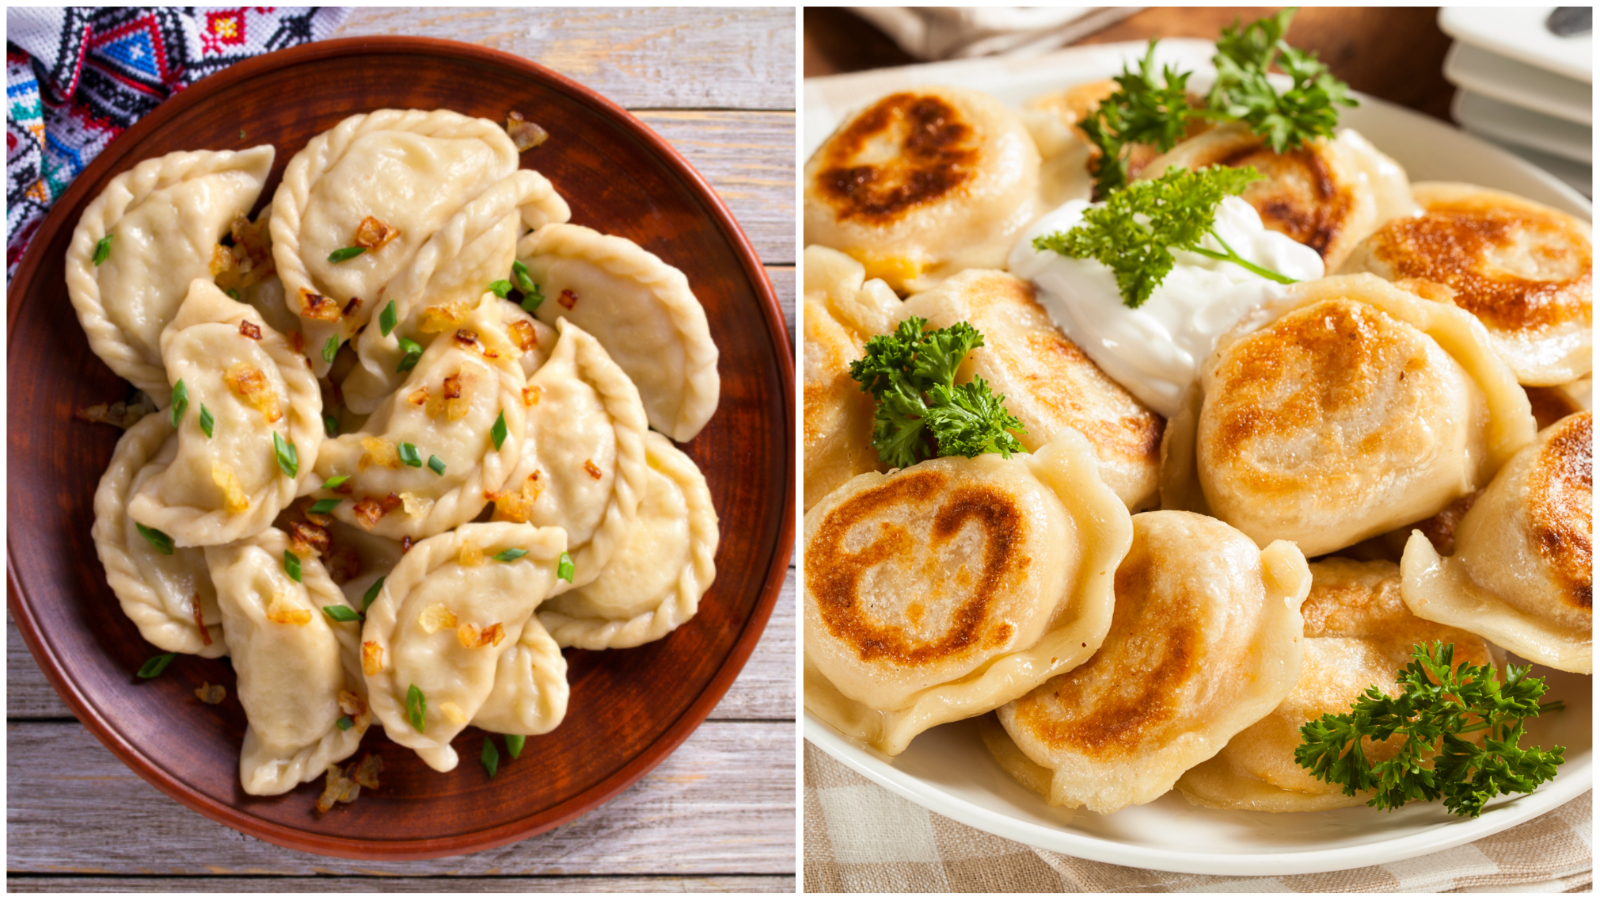 Martha Stewart podijelila recept za svoje najdraže jelo, poljske dumplingse kakve radi njena mama